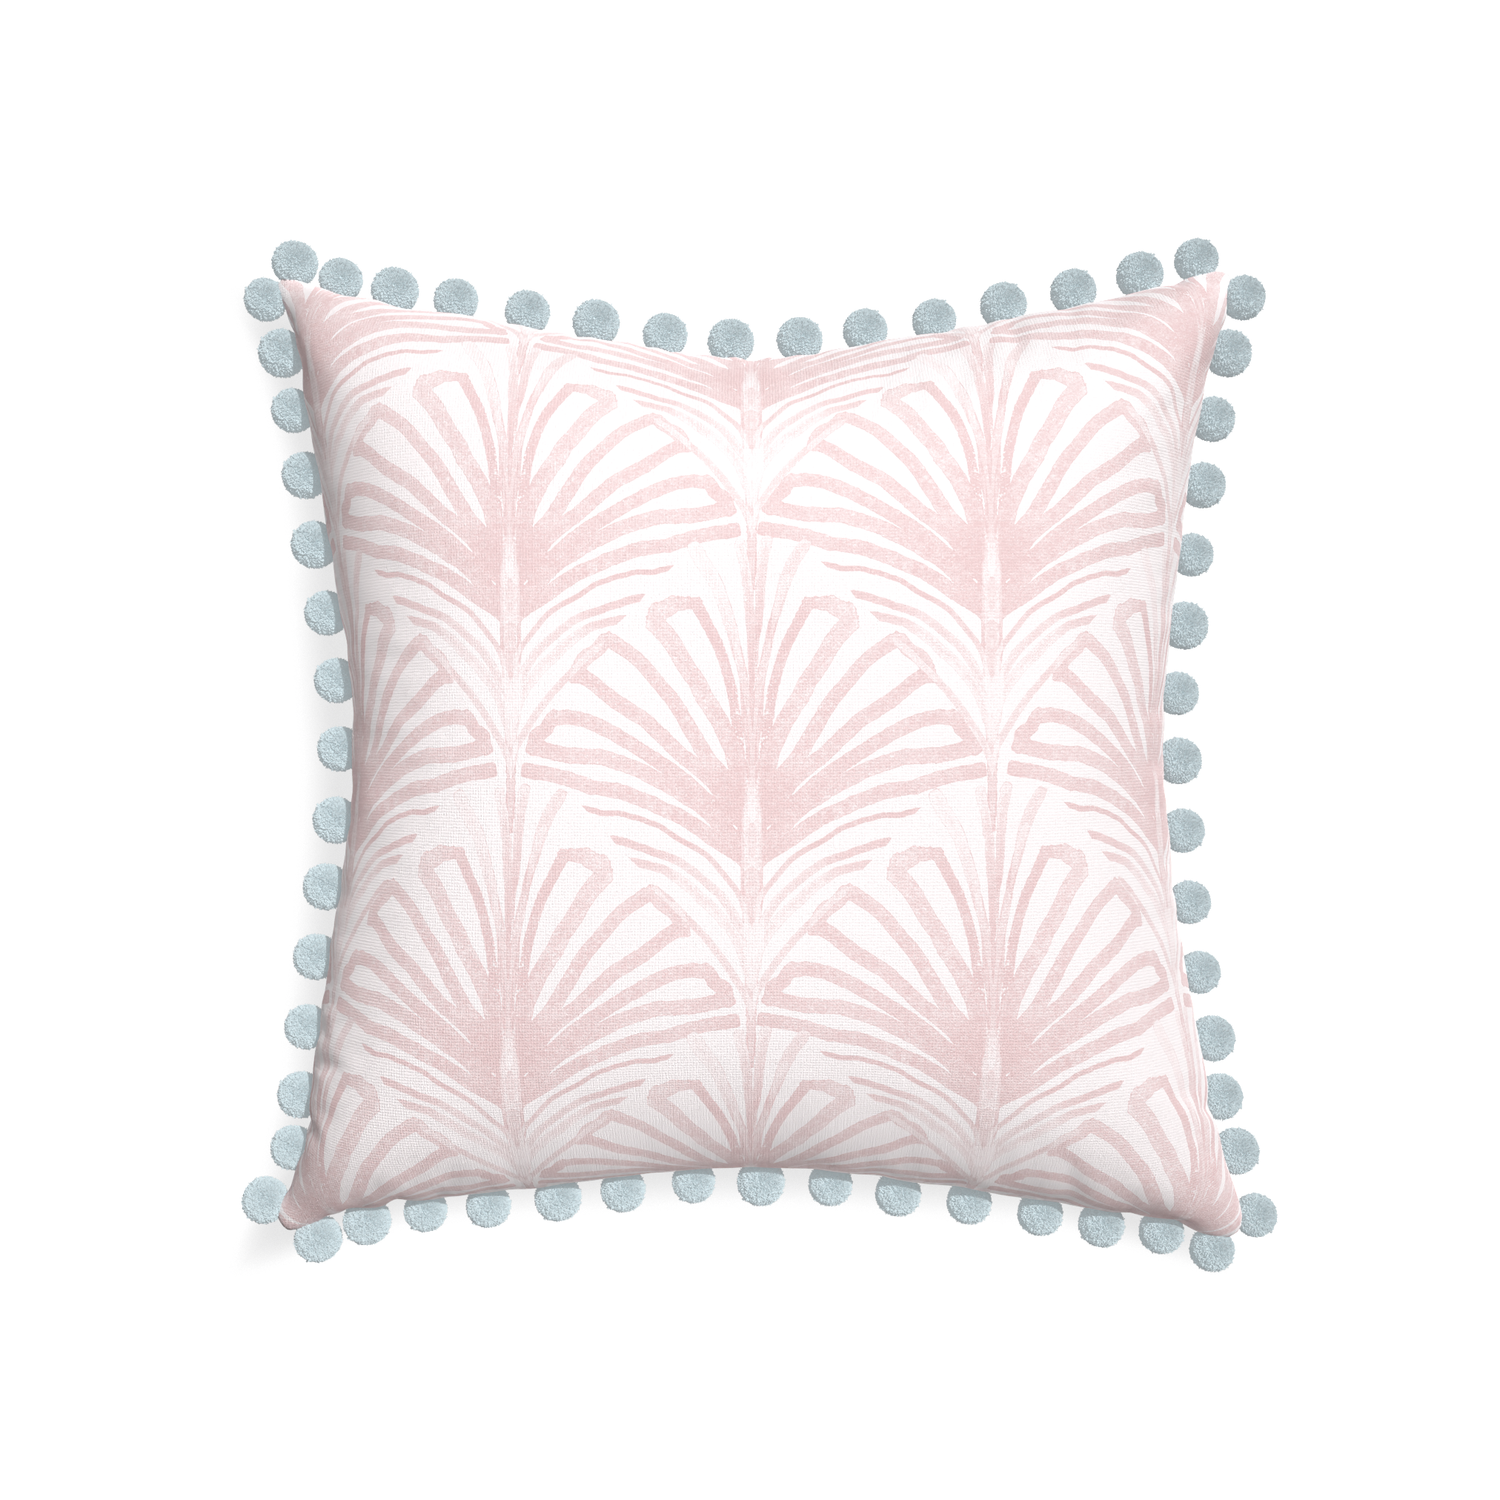 22-square suzy rose custom pillow with powder pom pom on white background